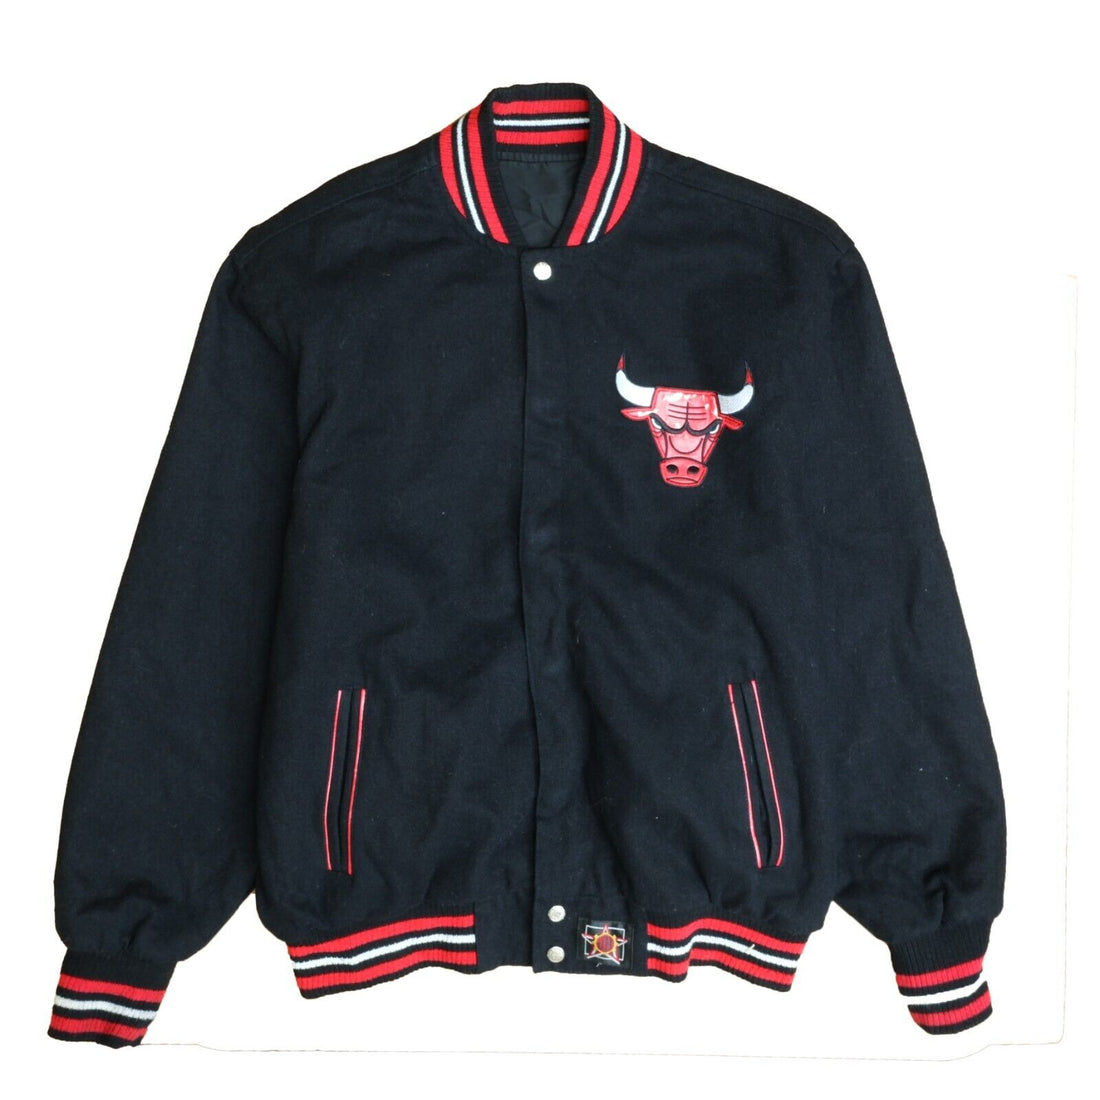 Chicago Bulls Wool Varsity Jacket Size Small Reversible NBA